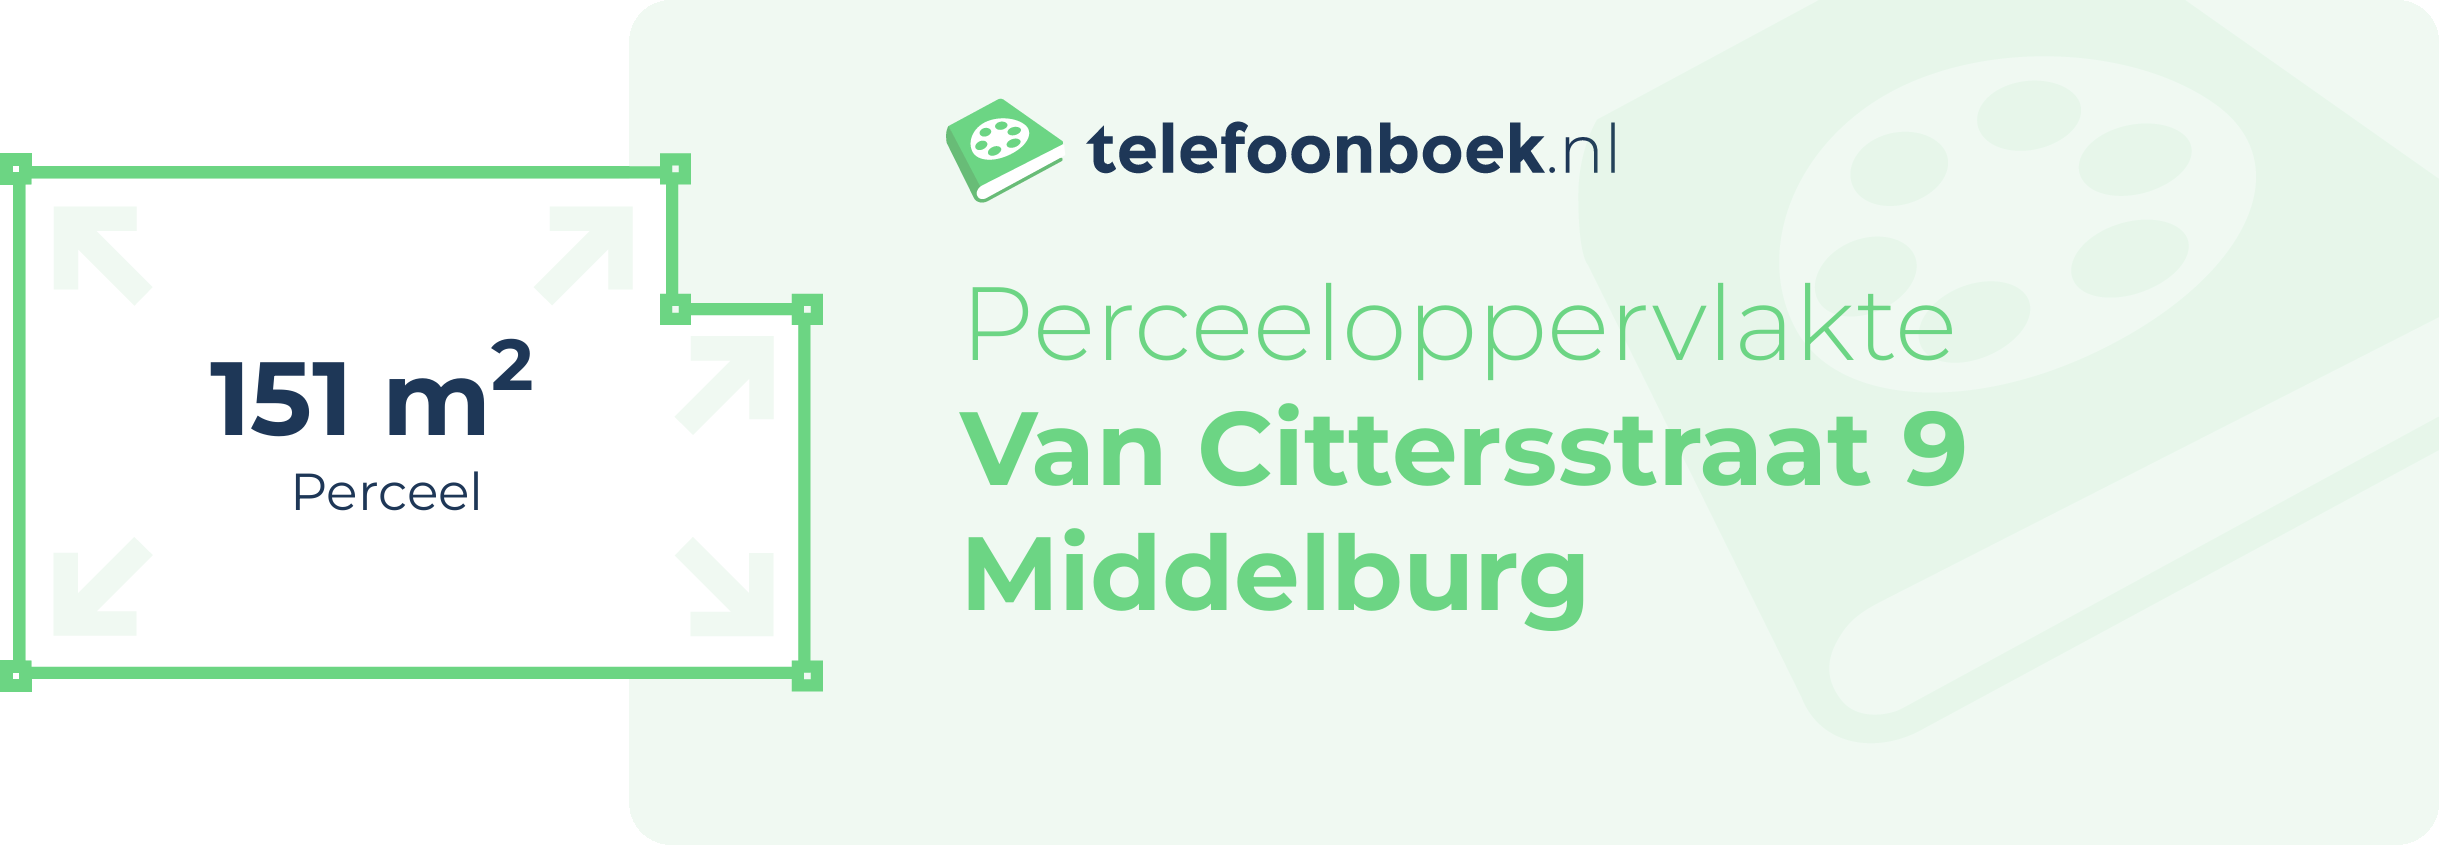 Perceeloppervlakte Van Cittersstraat 9 Middelburg